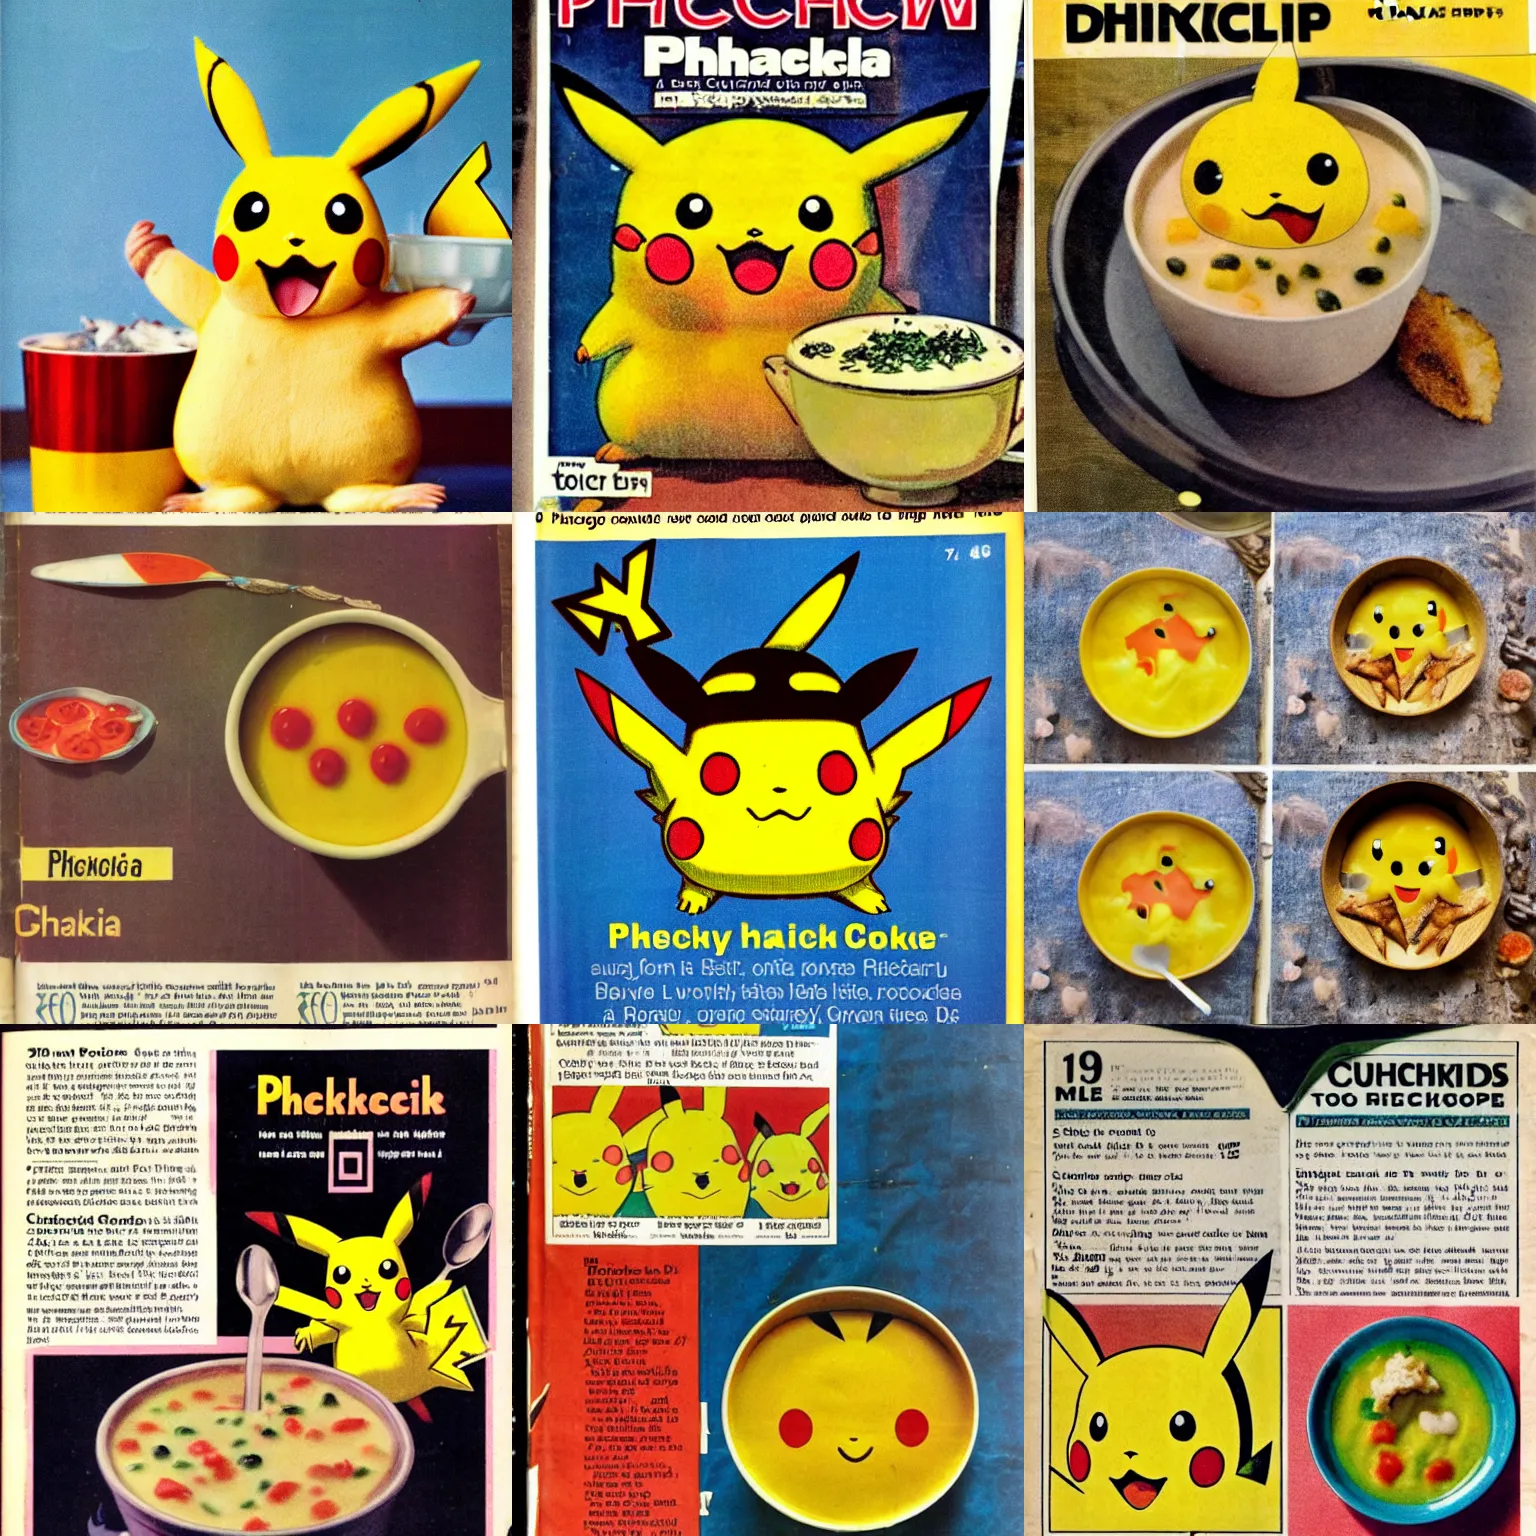 Prompt: 1970s magazine recipe for Pikachu Chowder